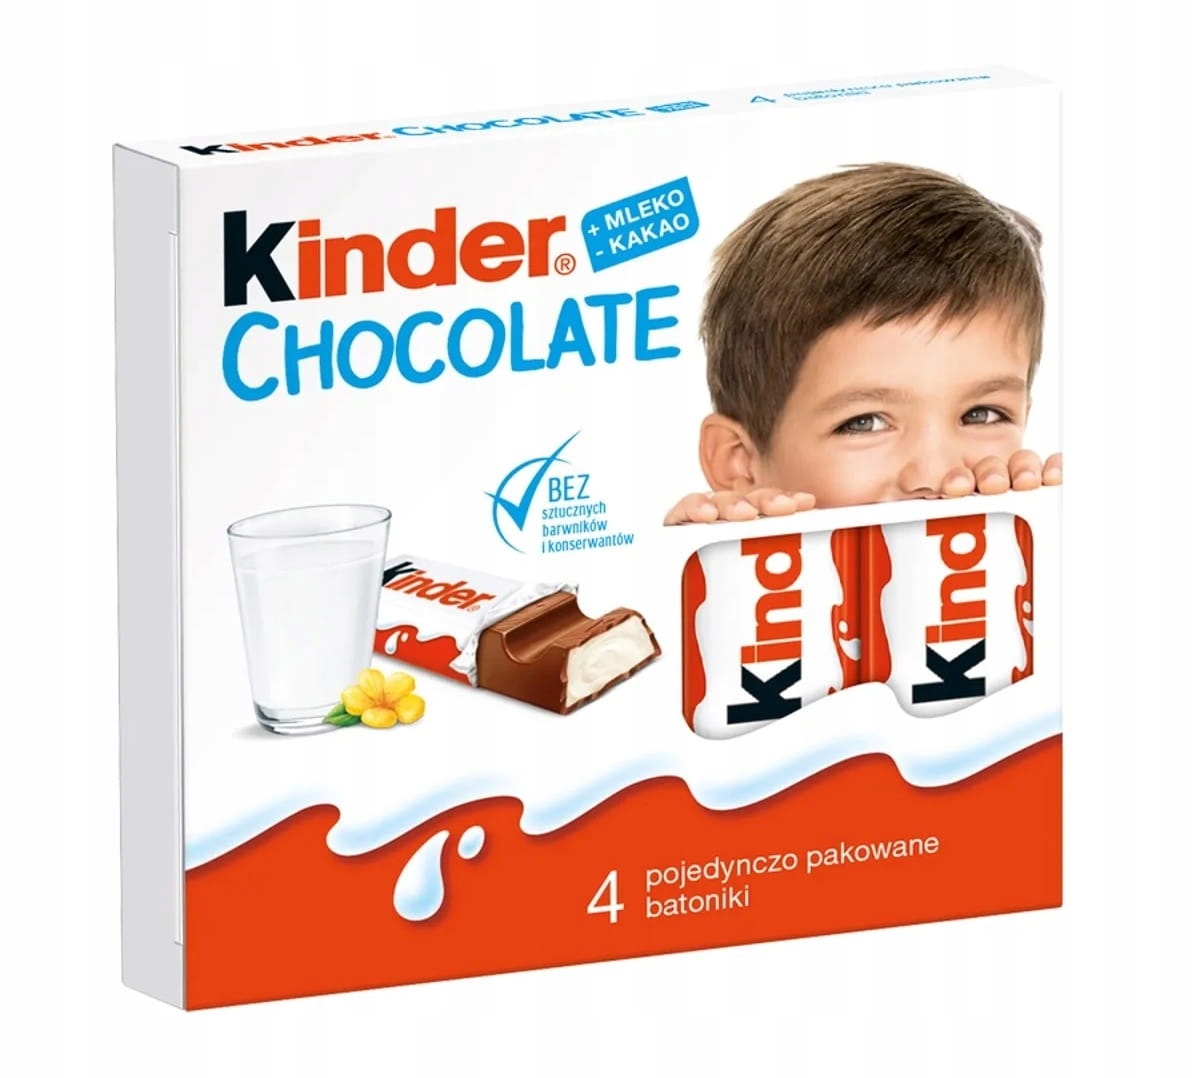 Начинка киндер шоколада. Киндер шоколад. Kinder шоколад. Шоколад kinder Chocolate. Киндер шоколад фото.